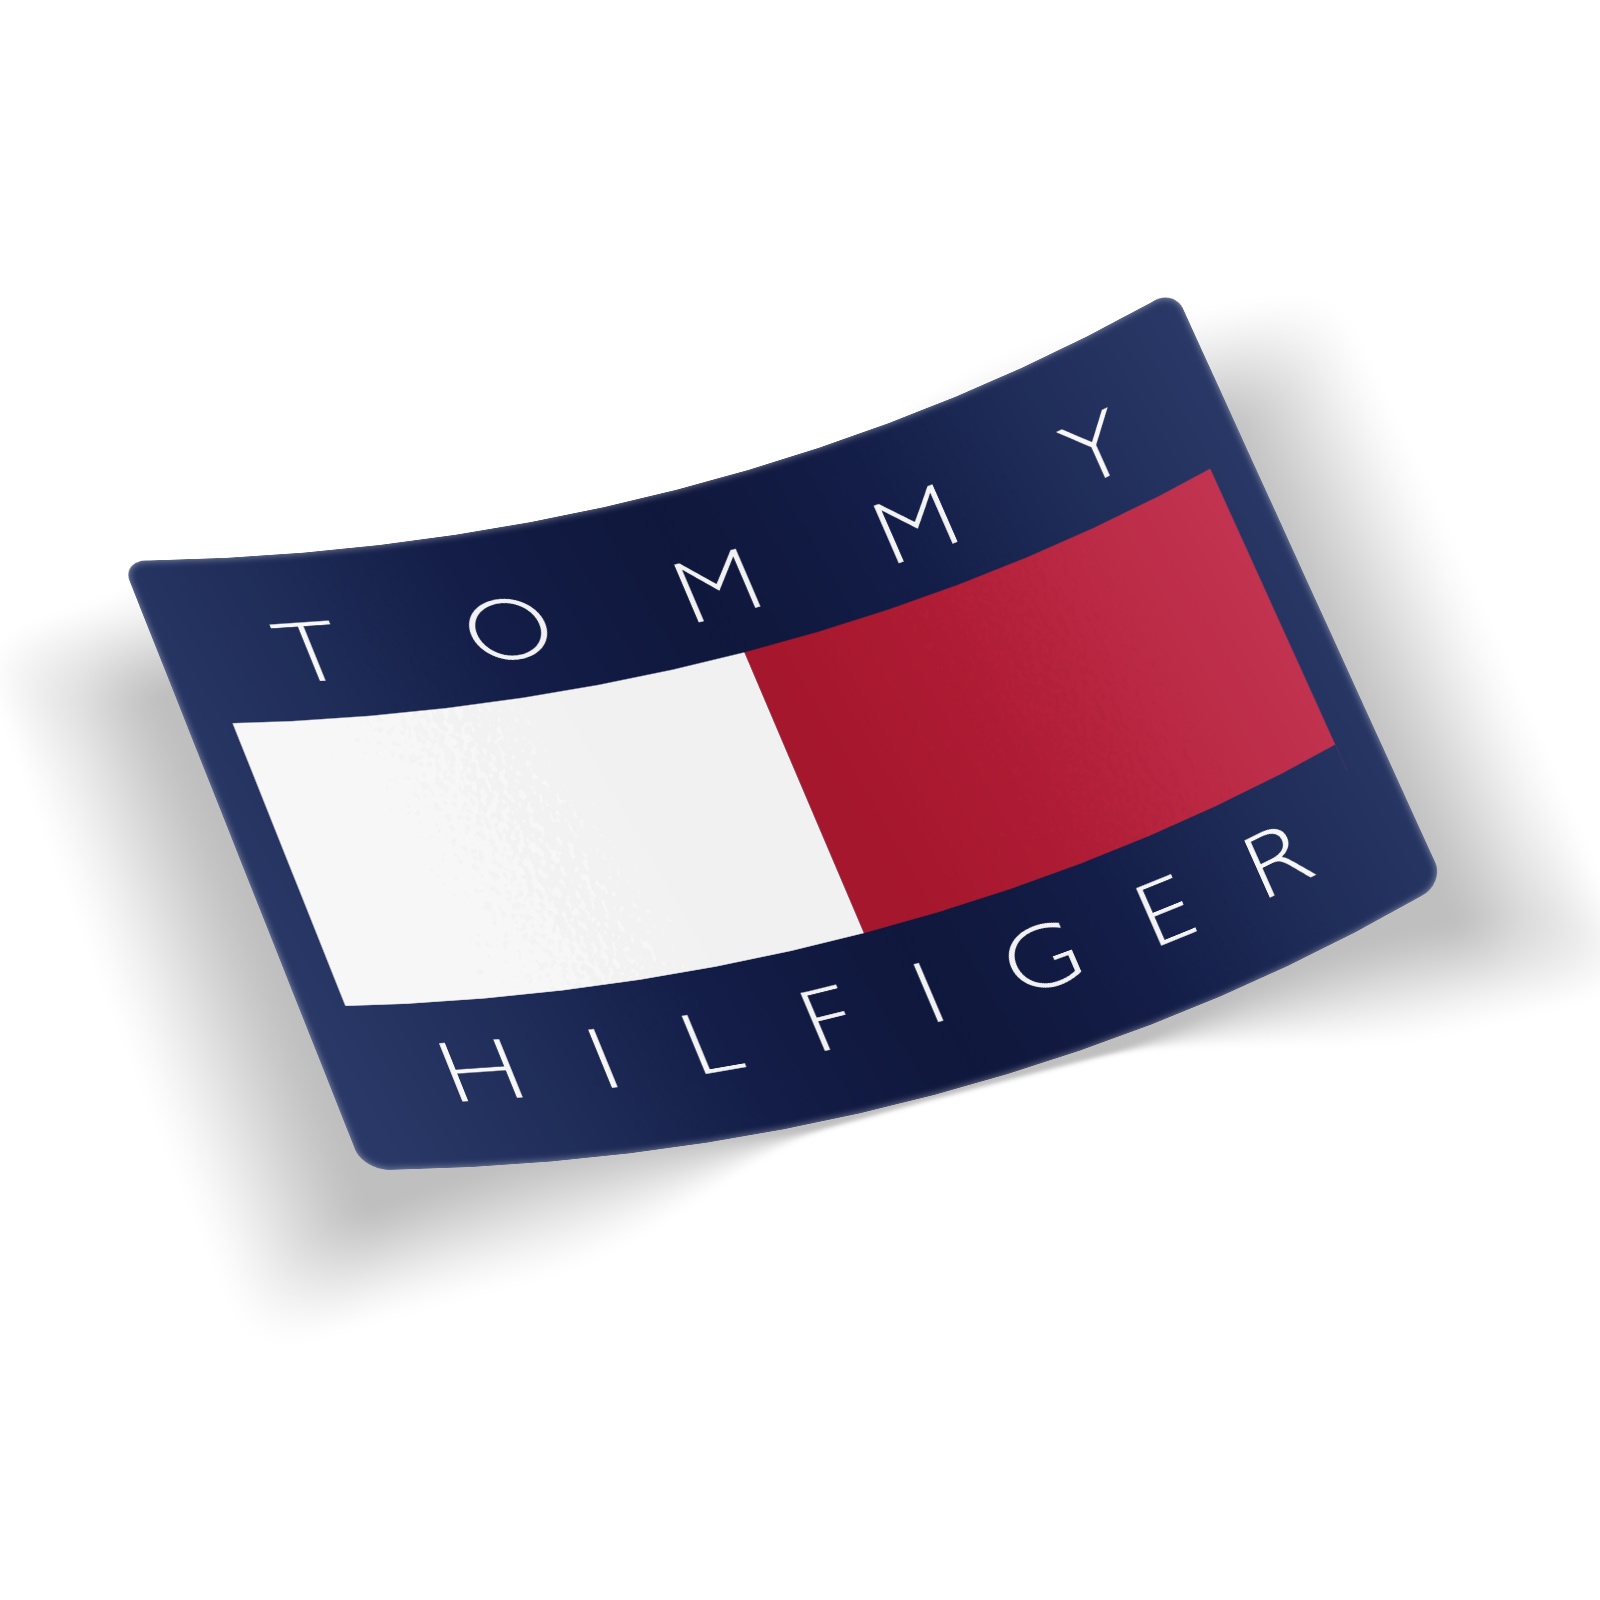 Tommy Hilfiger Американский Сайт Интернет Магазин